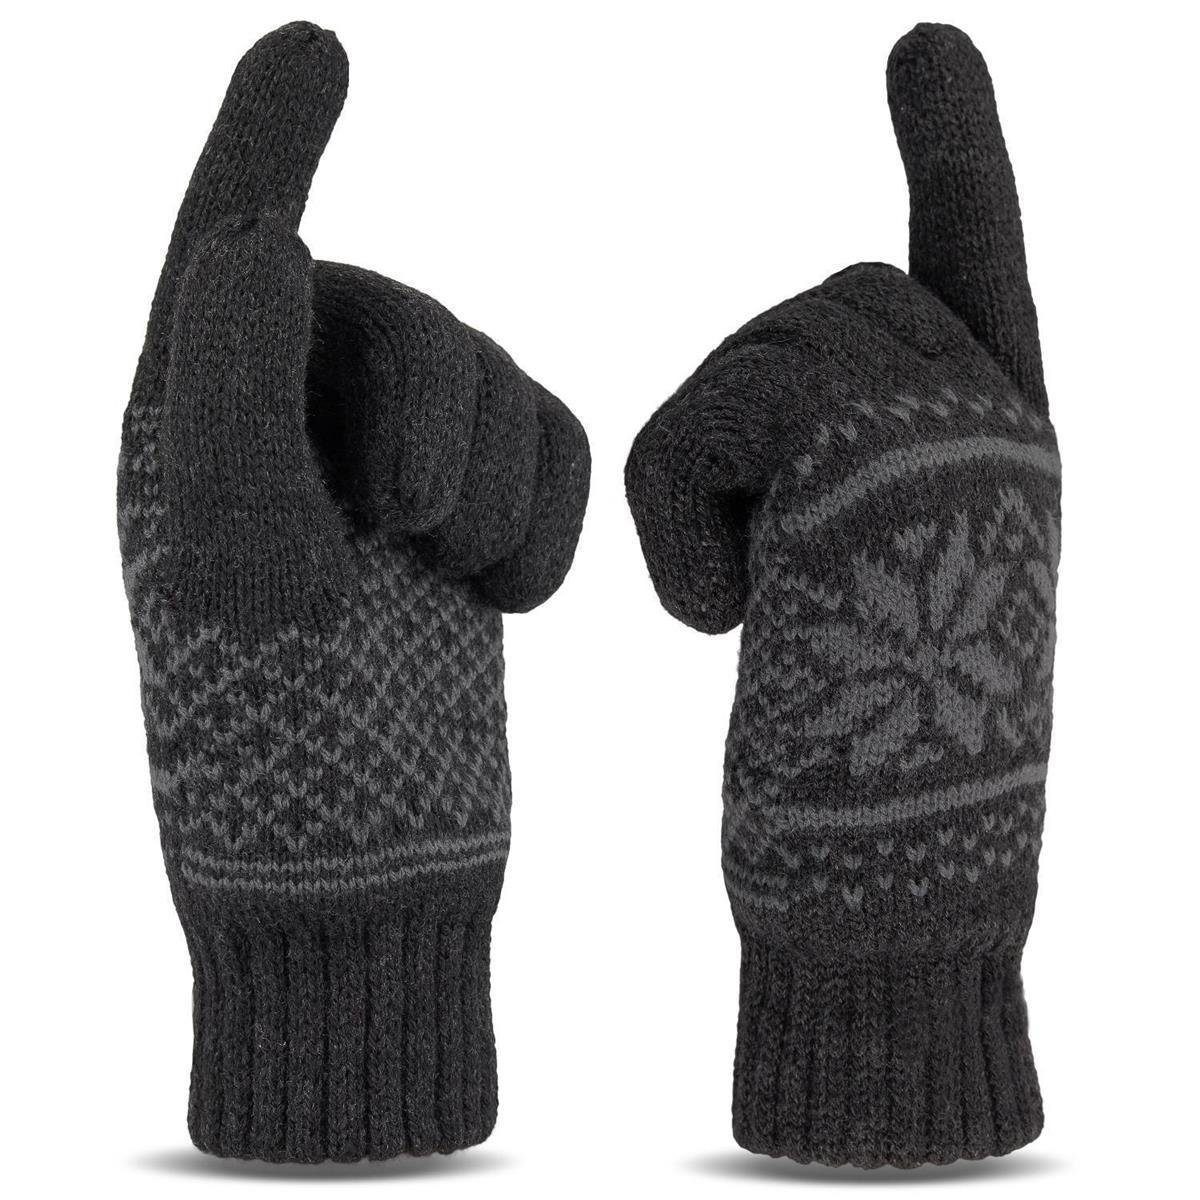 Thinsulate Strickhandschuhe Muster Tarjane 3M Unisex Anthrazit Handschuhe mit